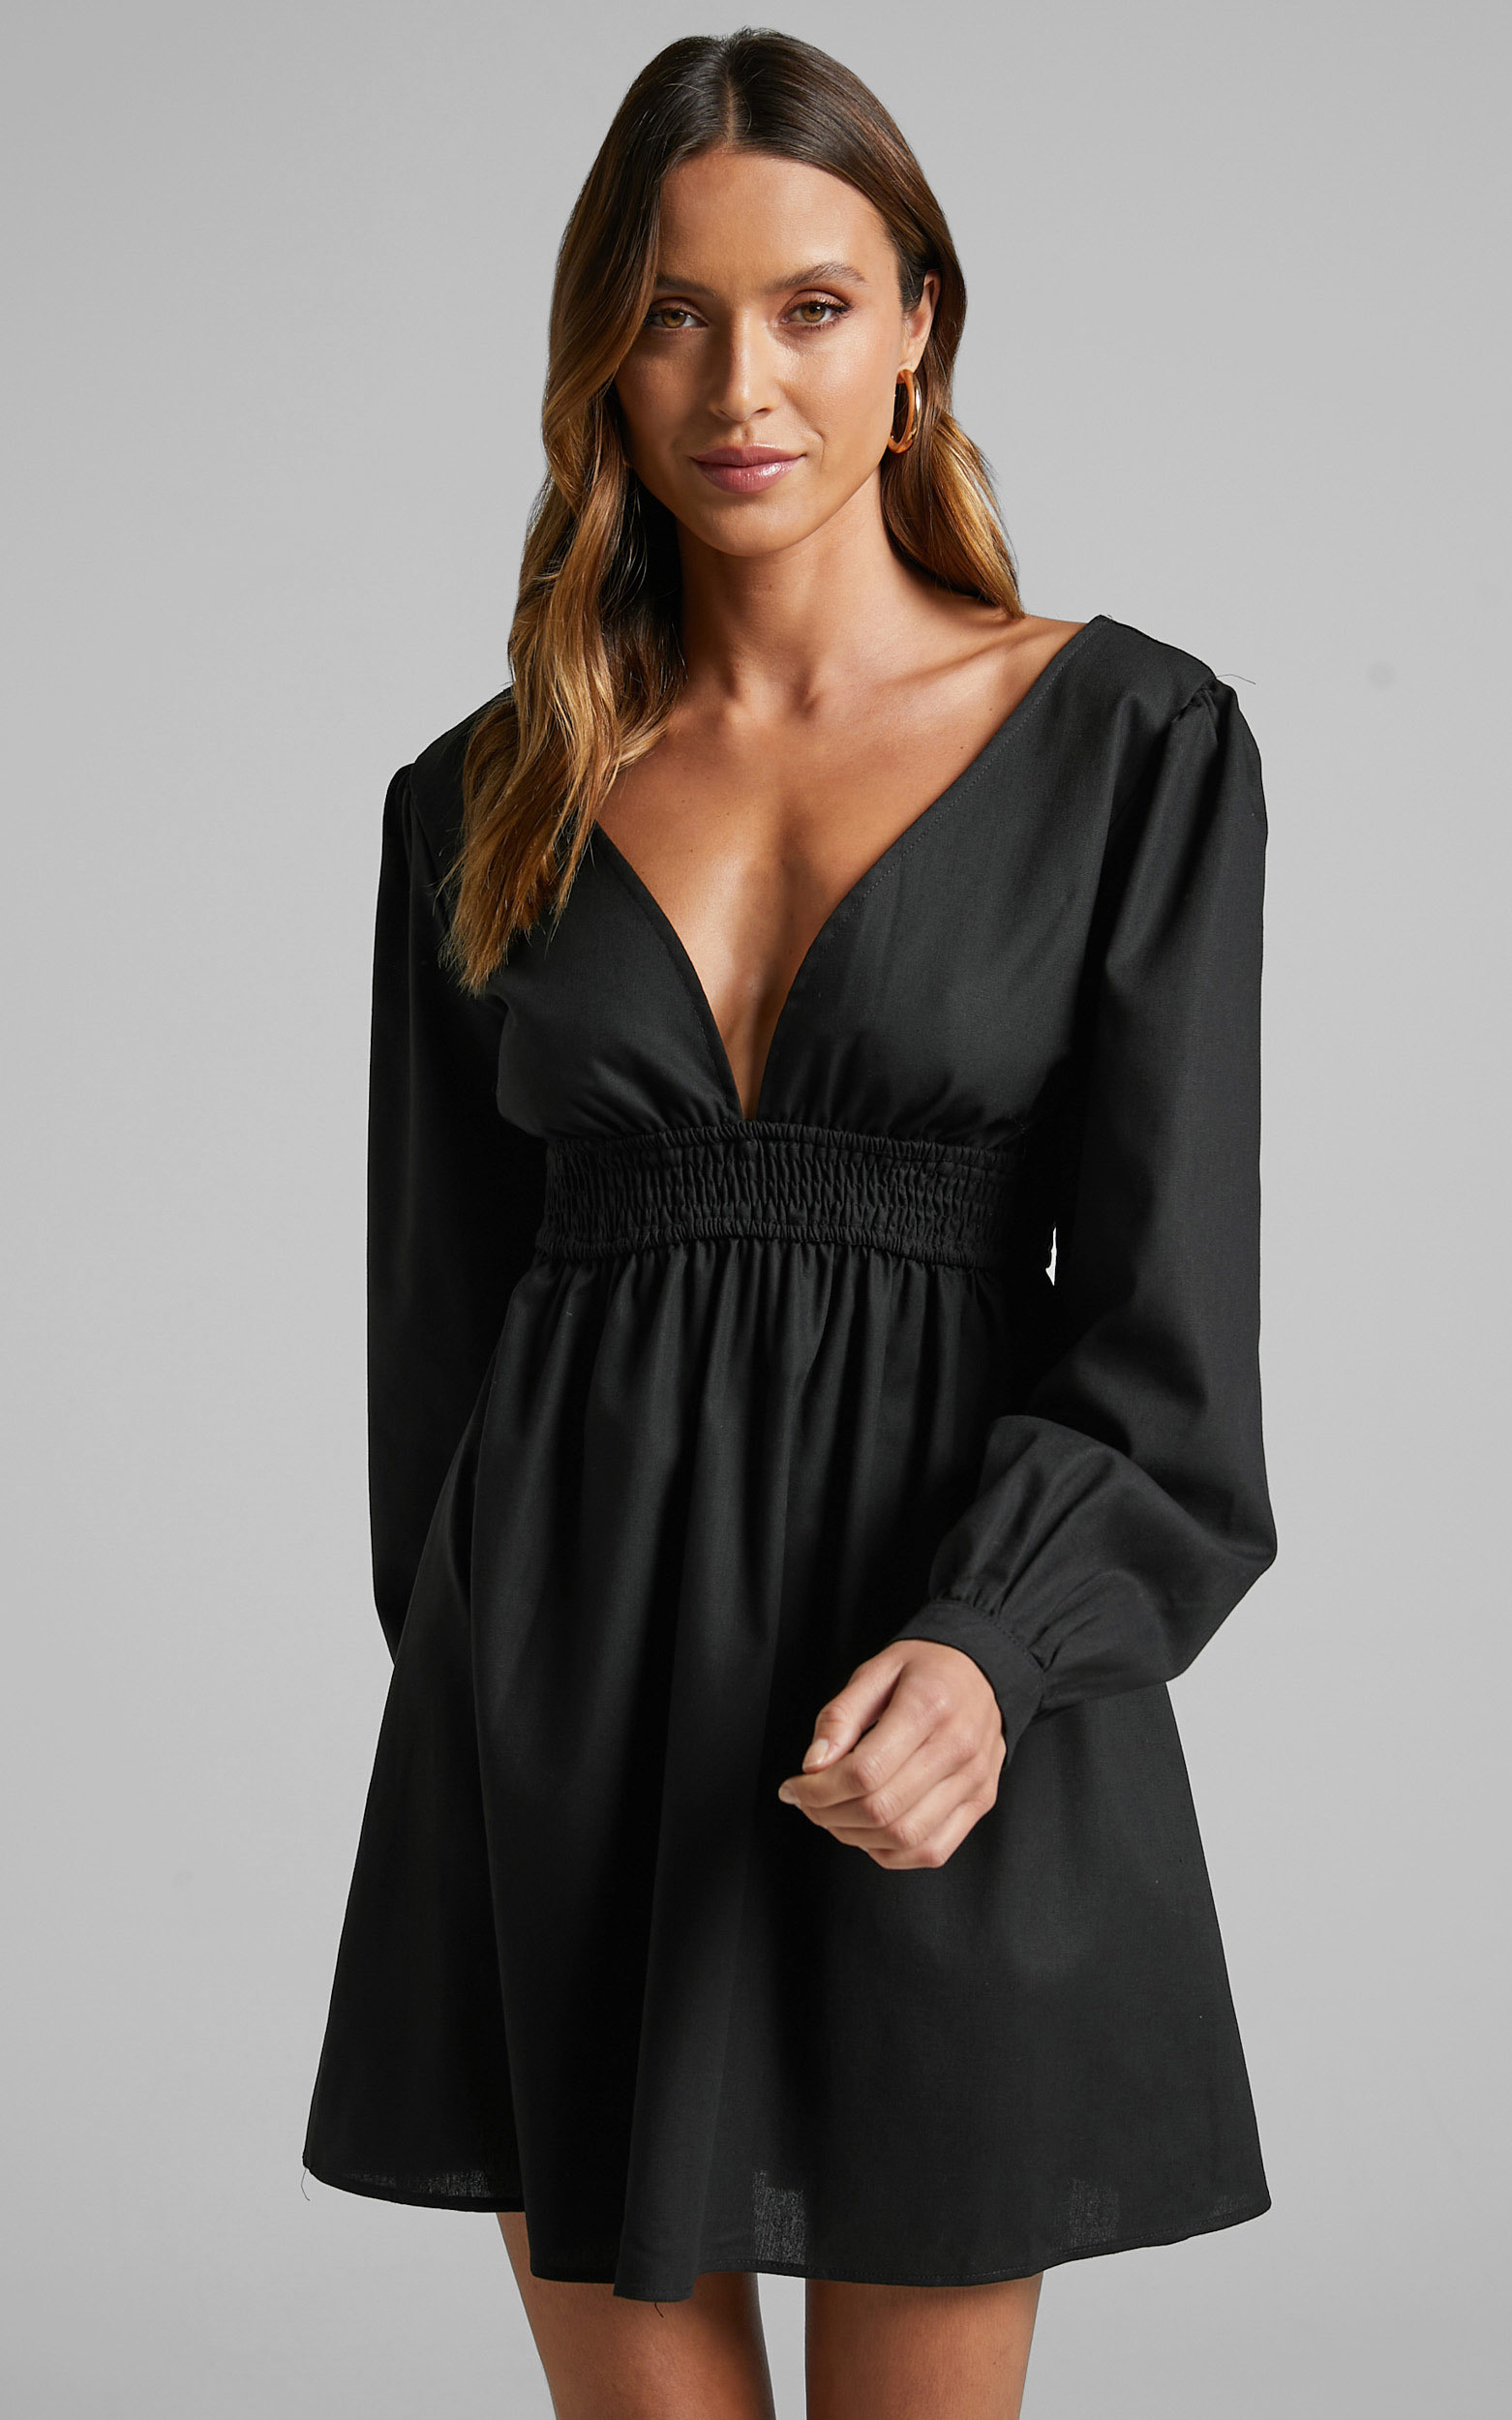 Lheya Long Sleeve Plunge Neckline A Line Mini Dress in Black - 06, BLK1, hi-res image number null